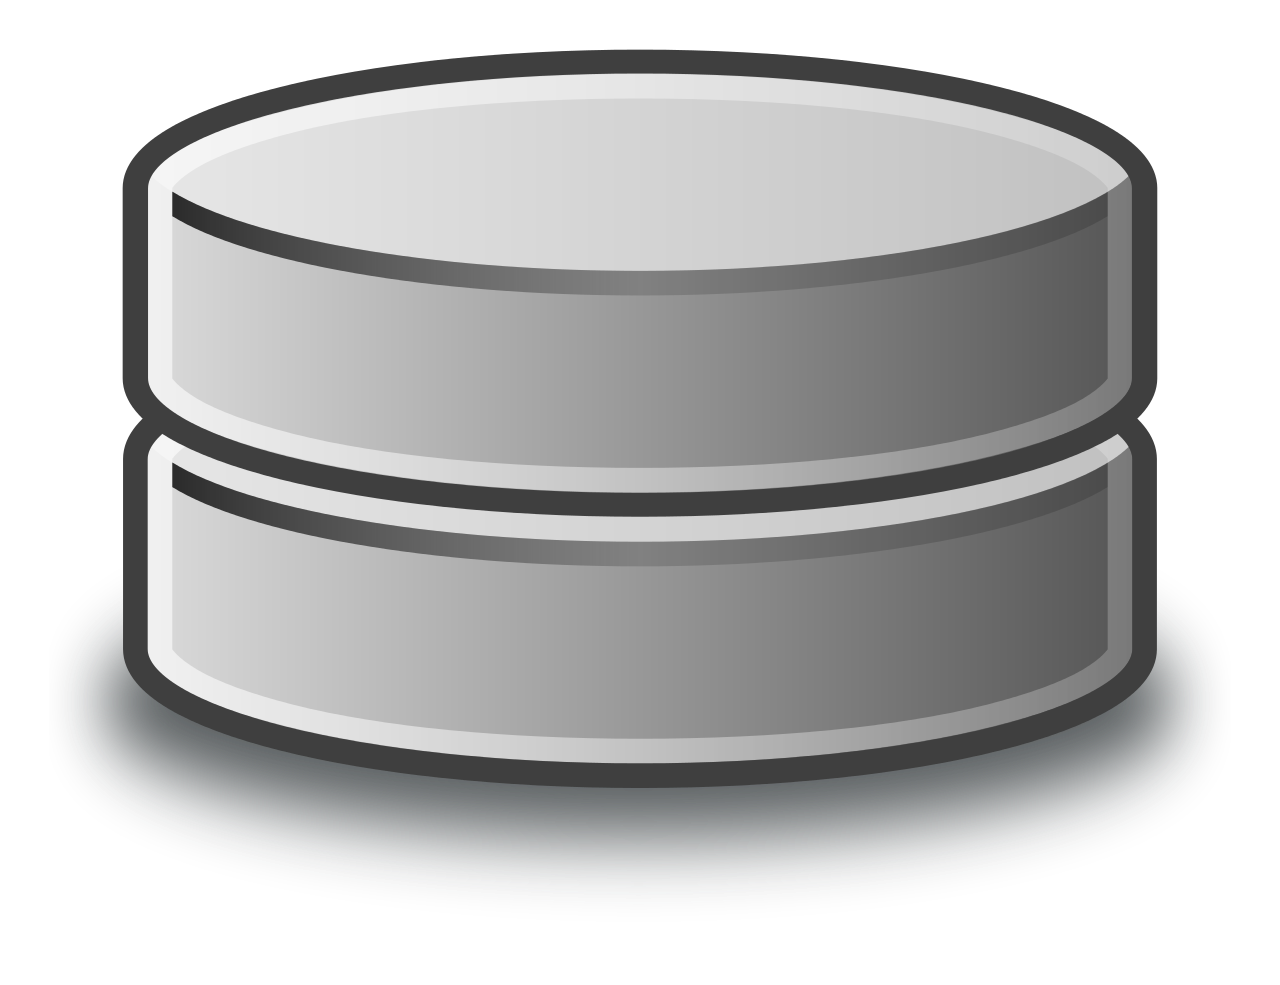 A disk storage icon.